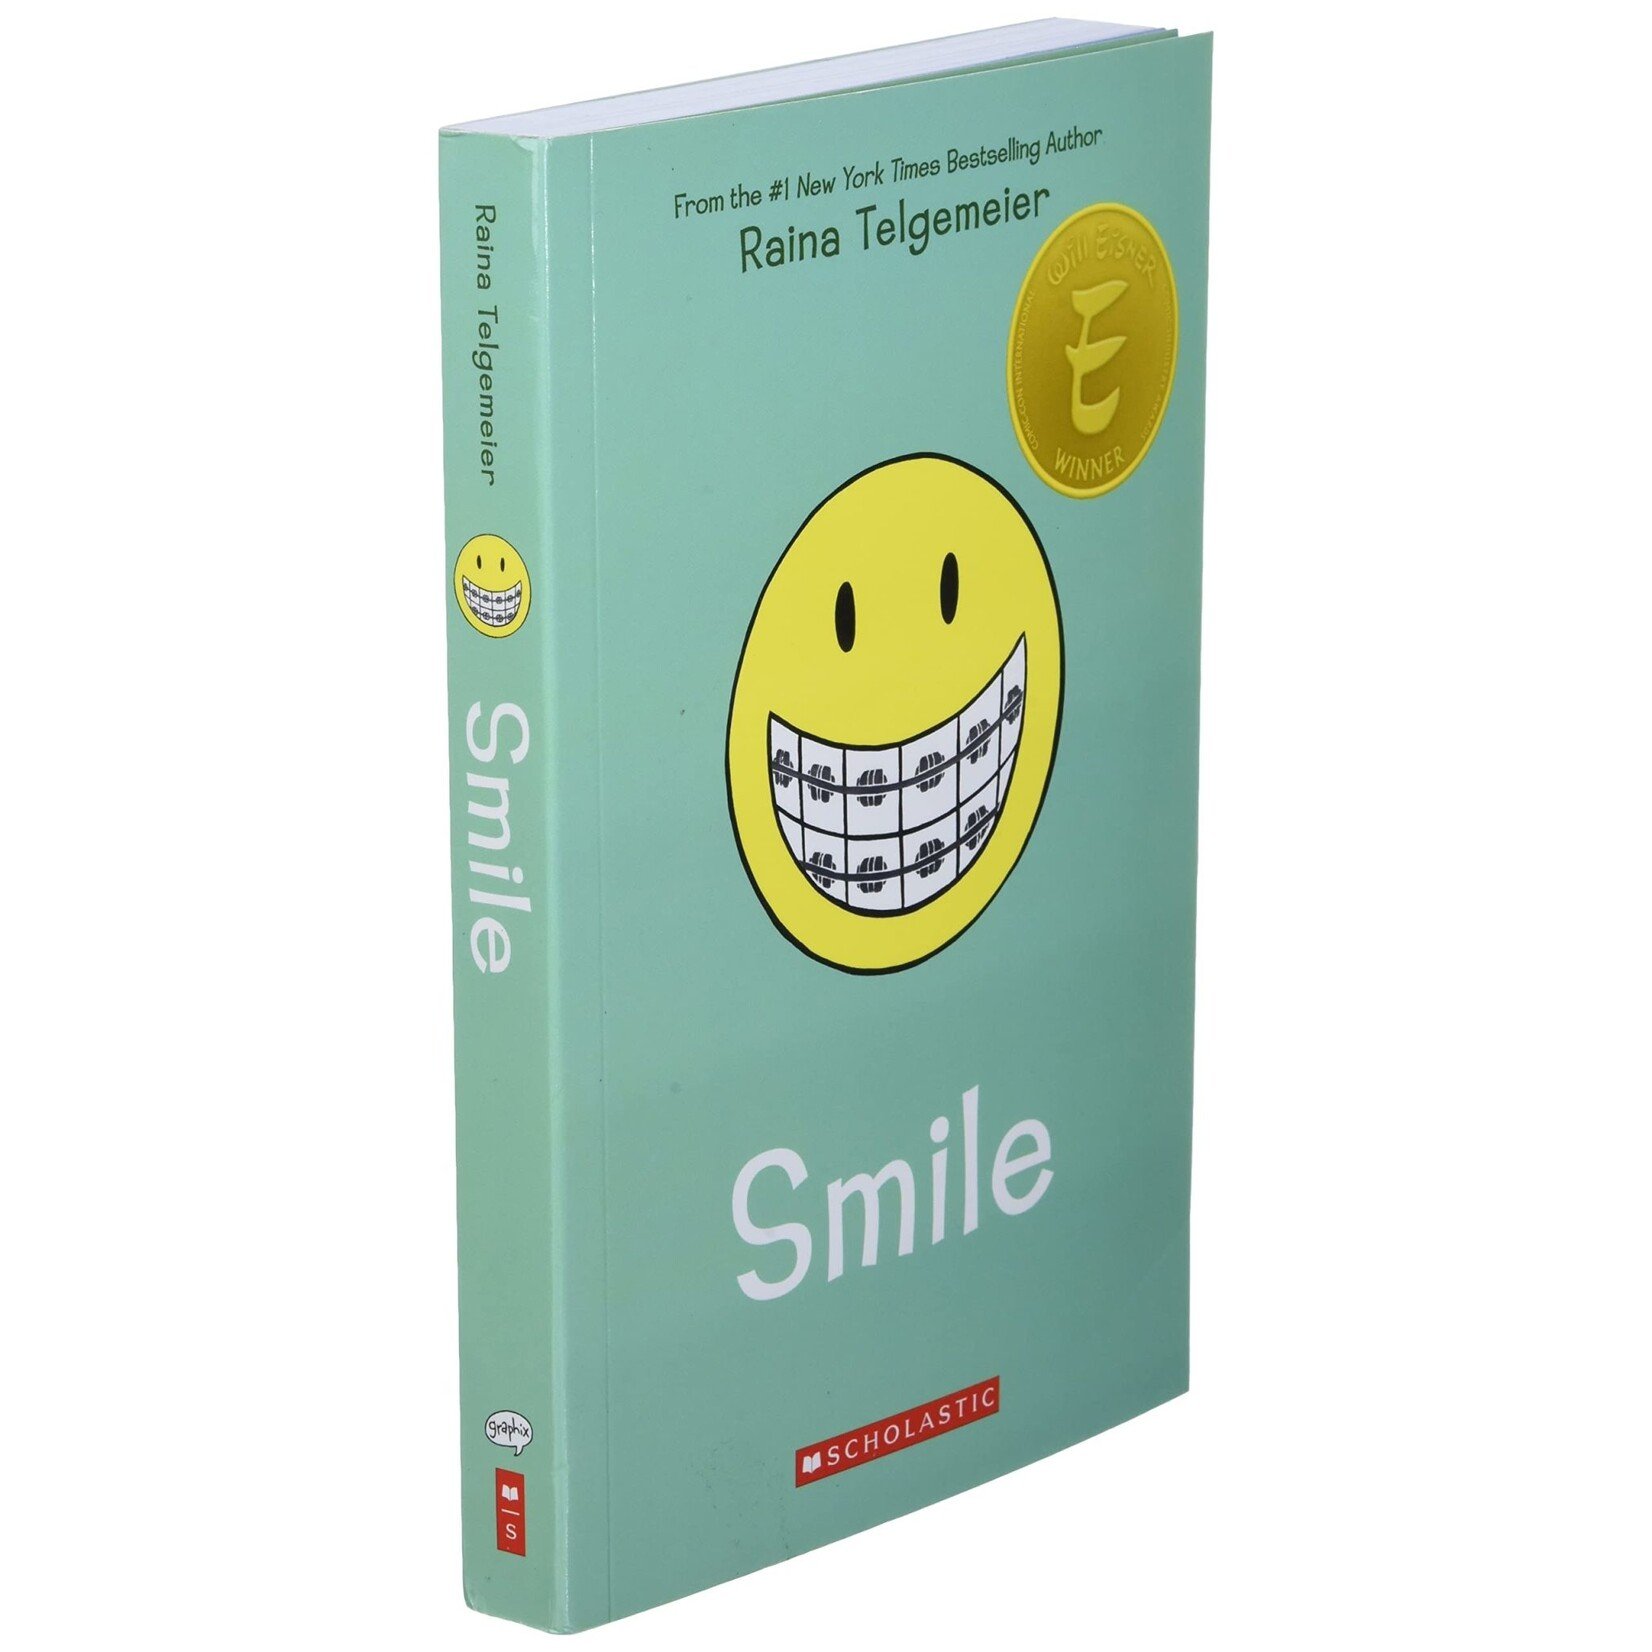 Smile: A Graphic Novel #1